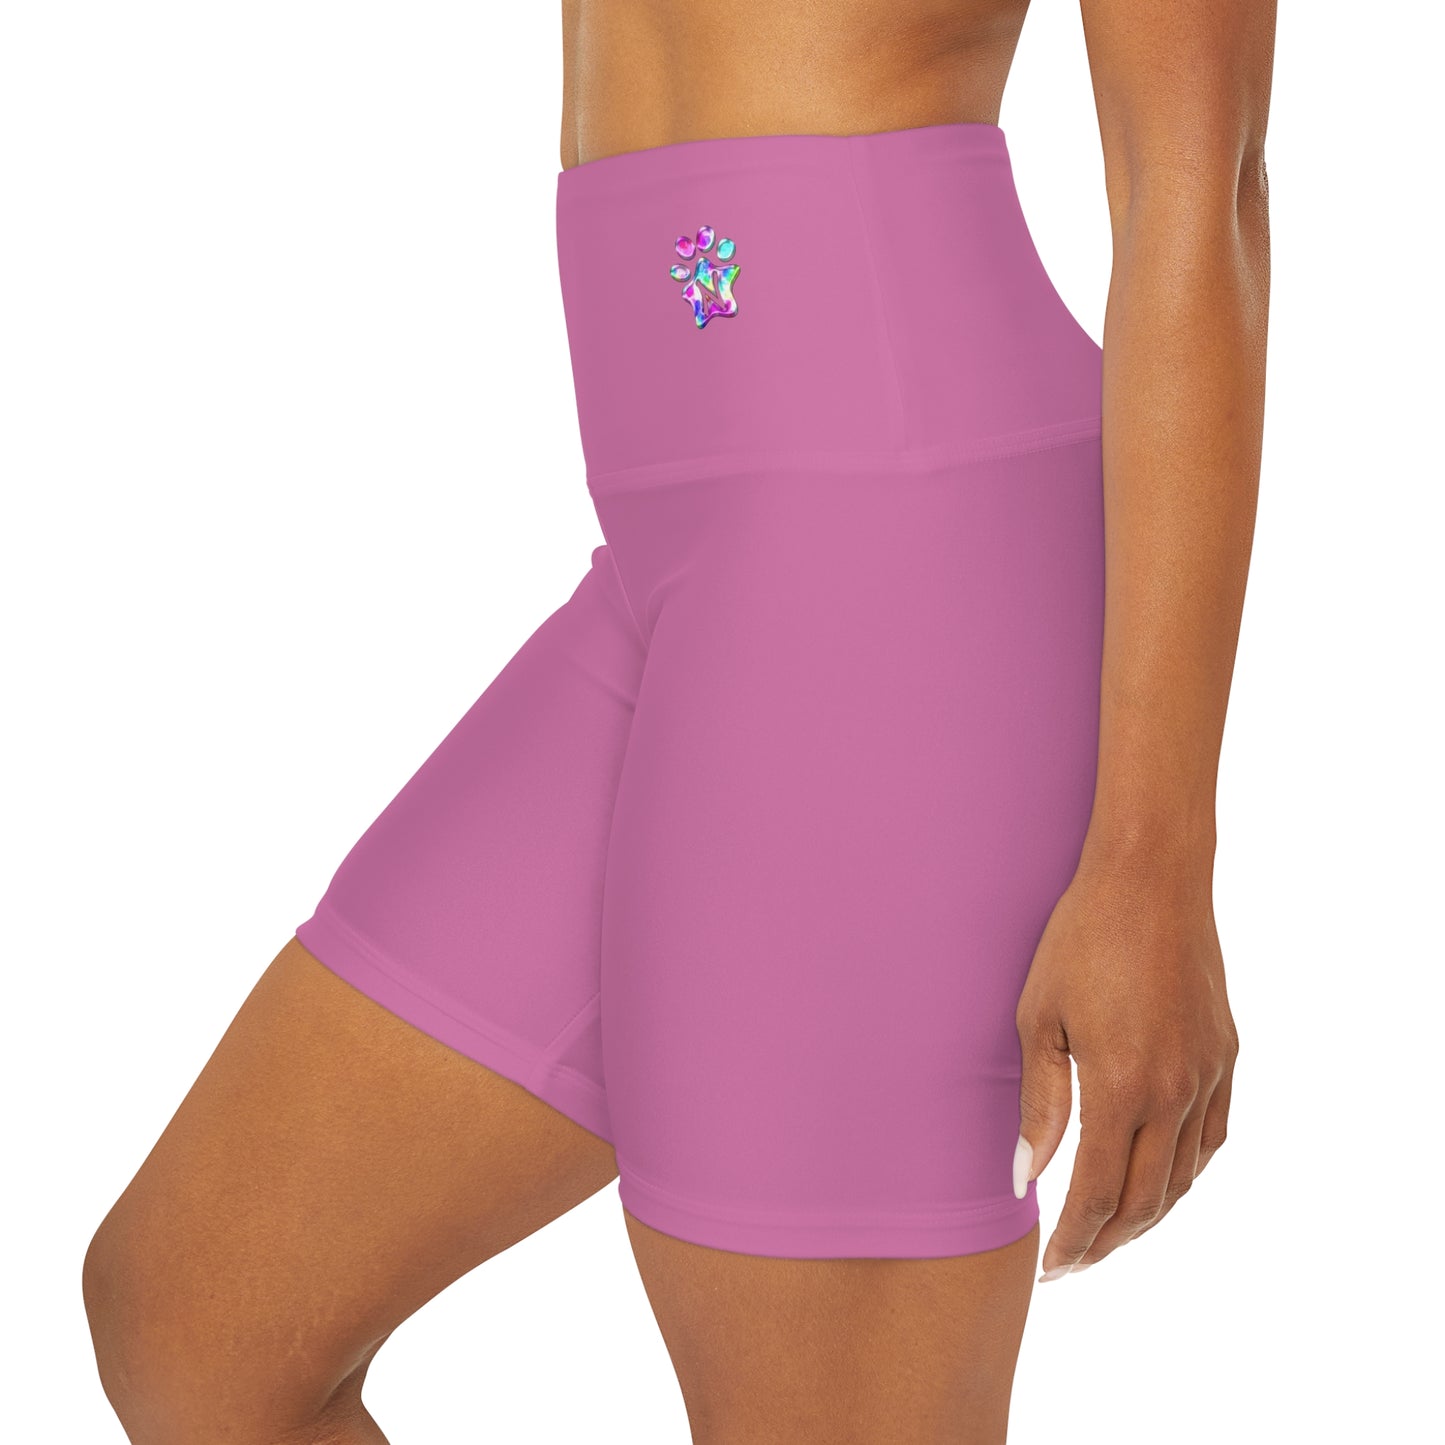 Paw-N-Star High Waisted Light Pink Yoga Shorts